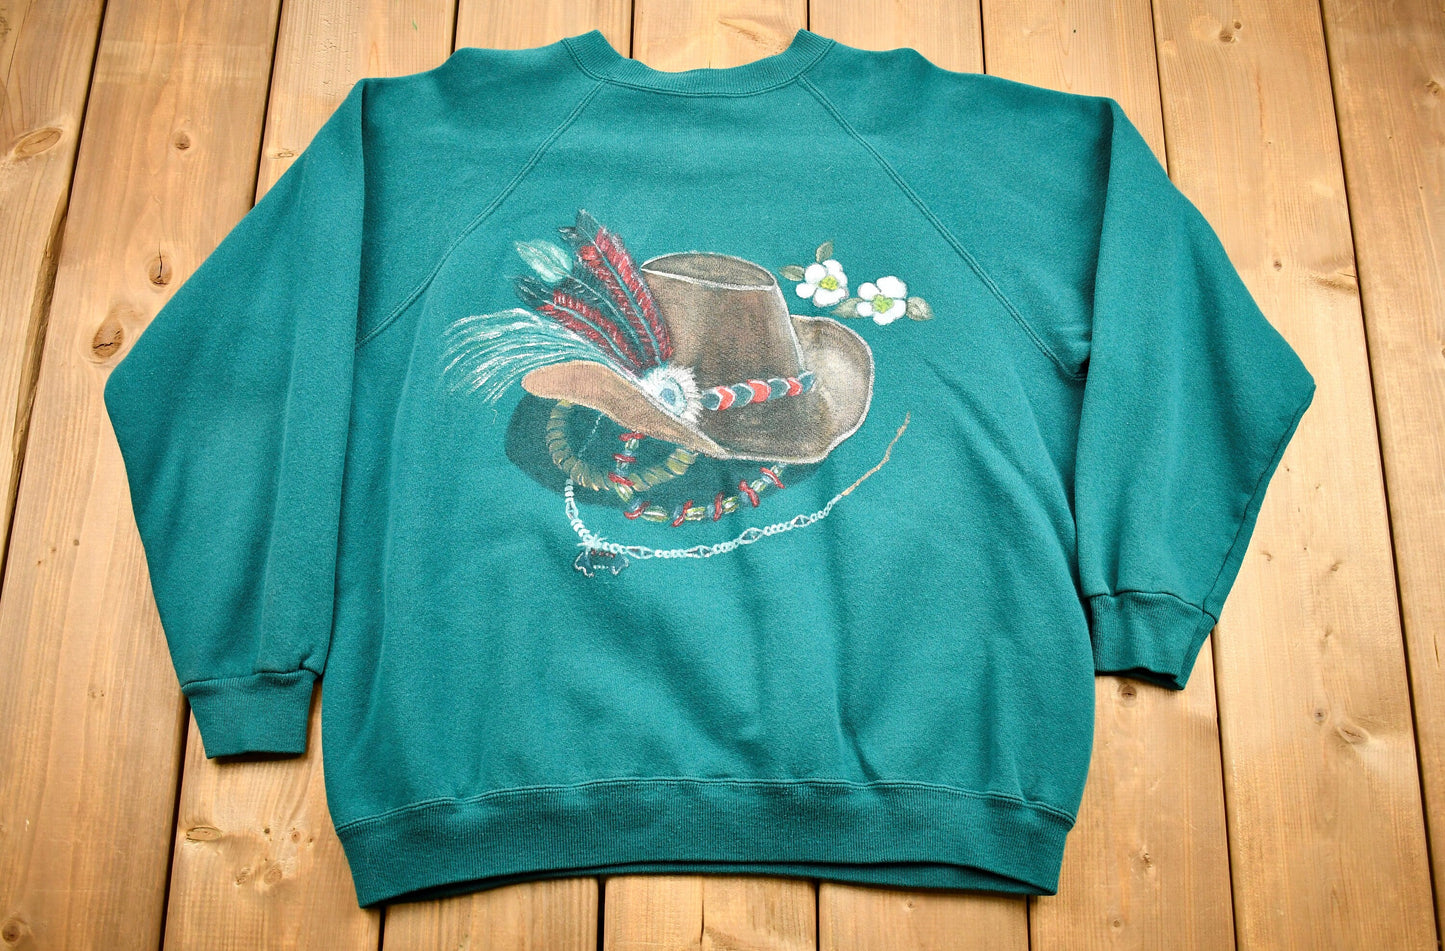 Vintage 1980s Native American Graphic Raglan Crewneck / Earth Tone Sweatshirt / USA Made Materials Pullover Sweatshirt / Hanes Herway